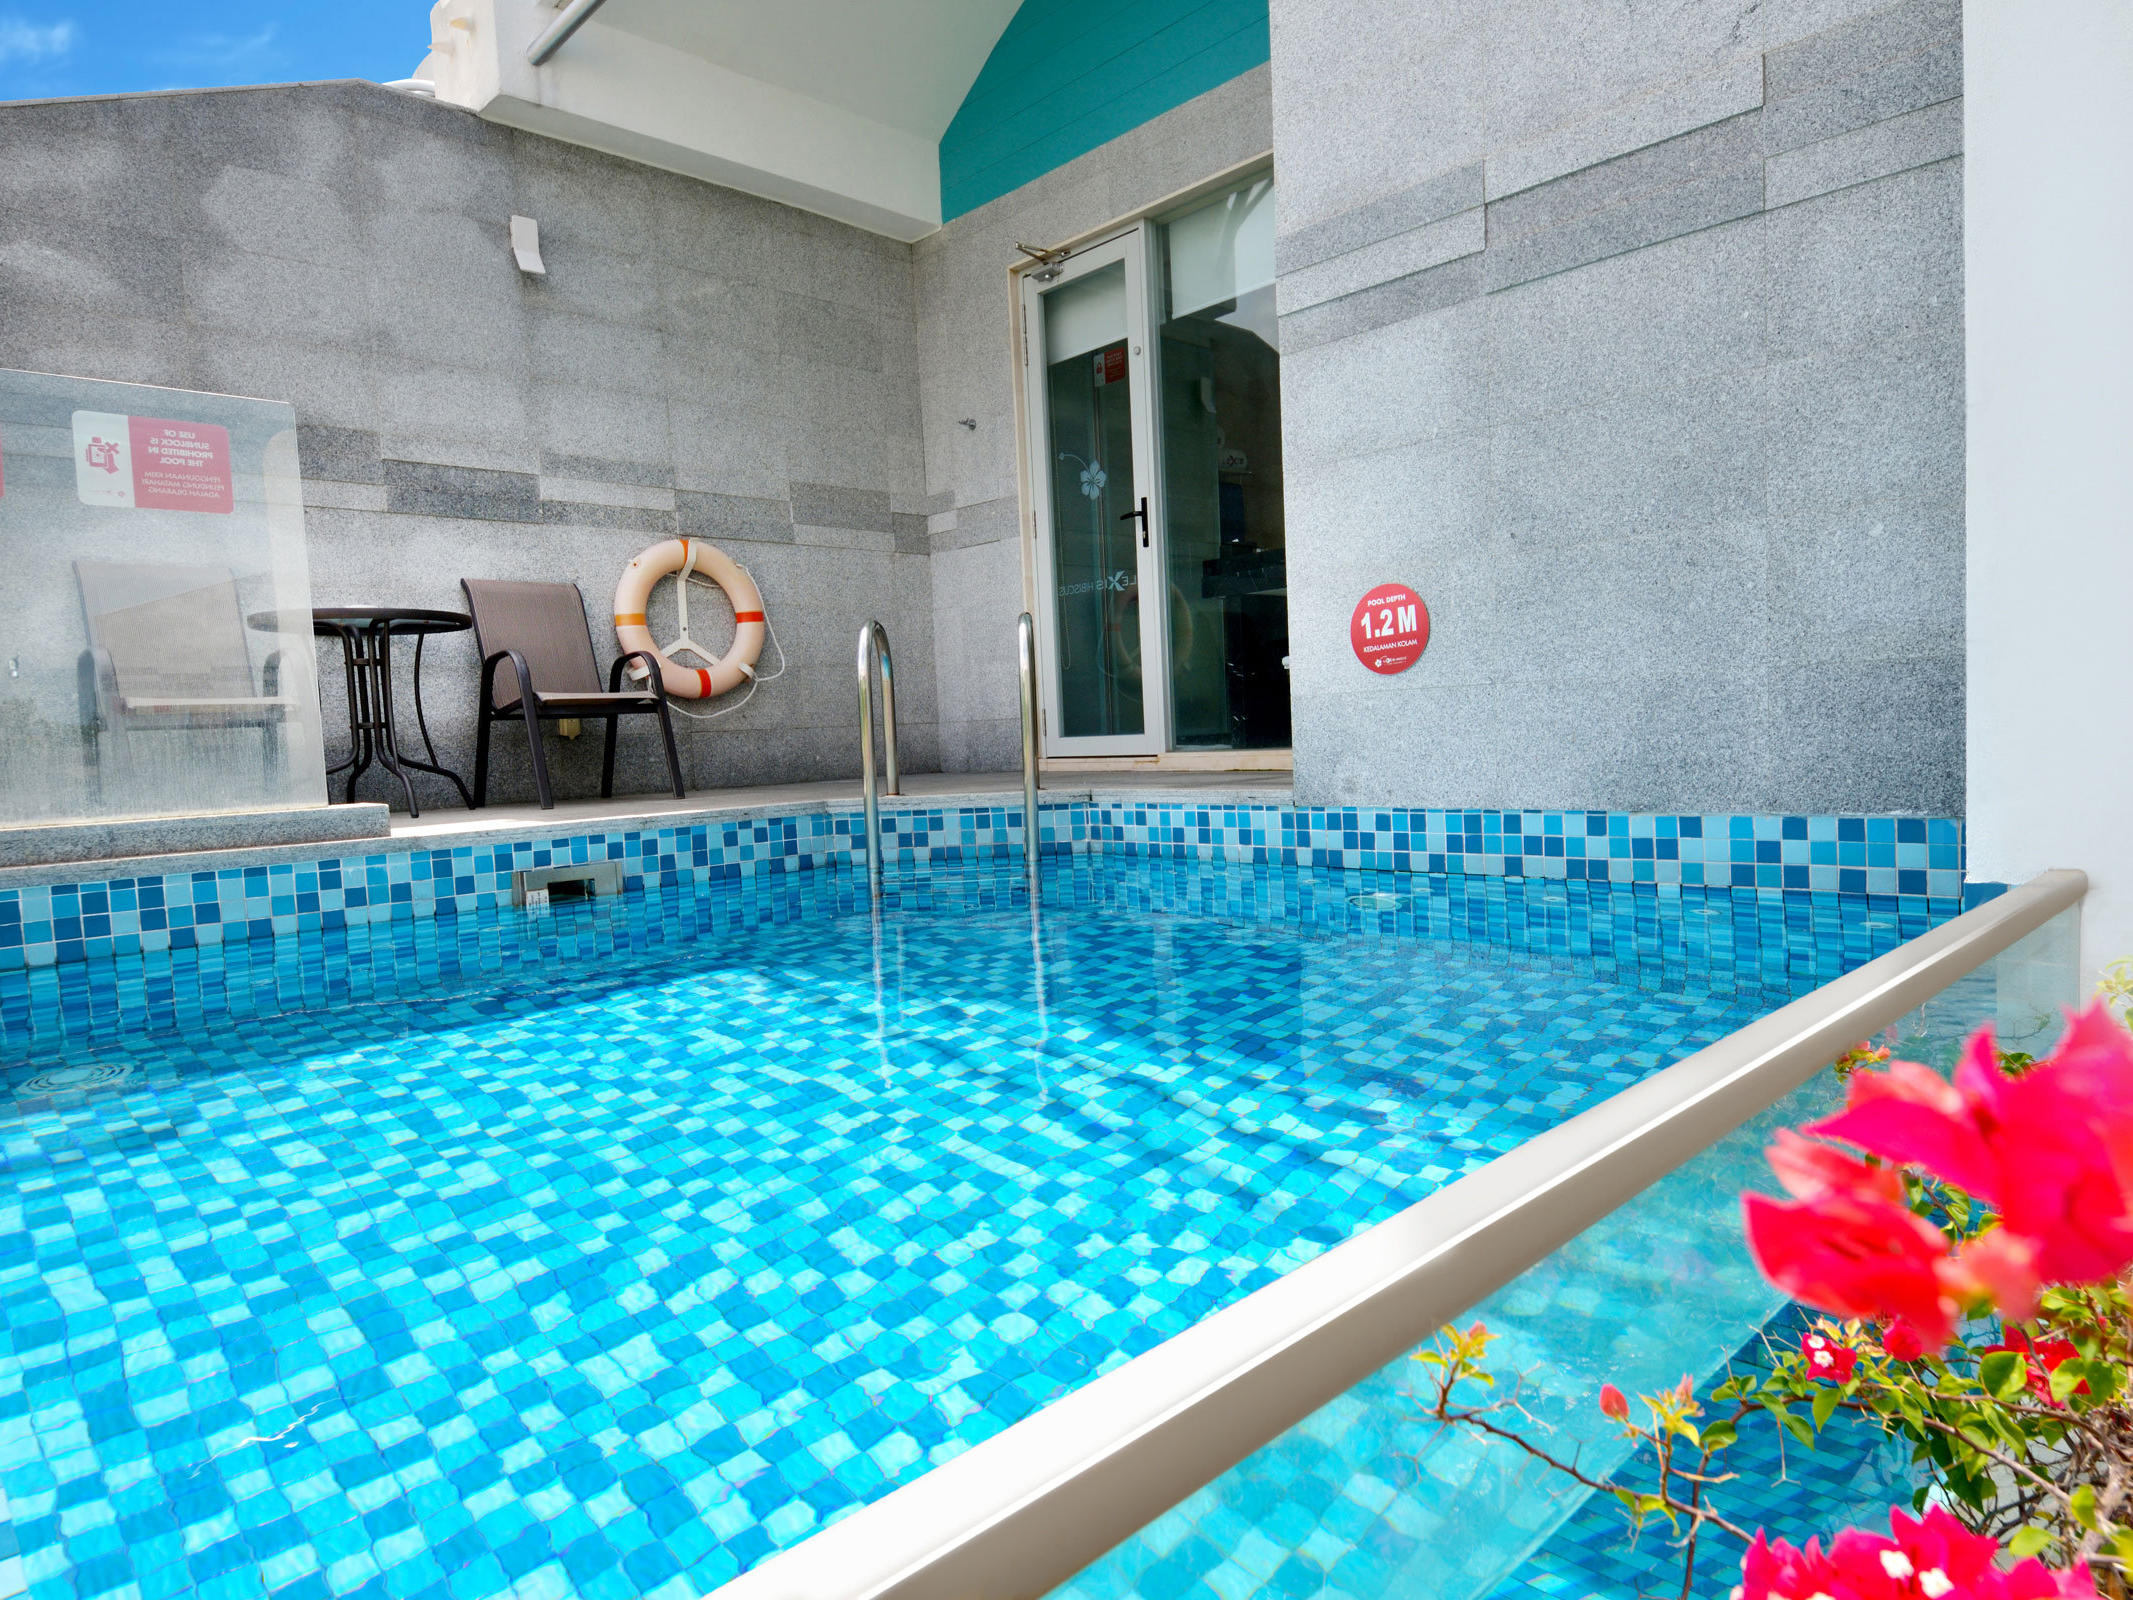 Executive Pool Villa | Port Dickson Villa with Private Dip Pool & Sauna